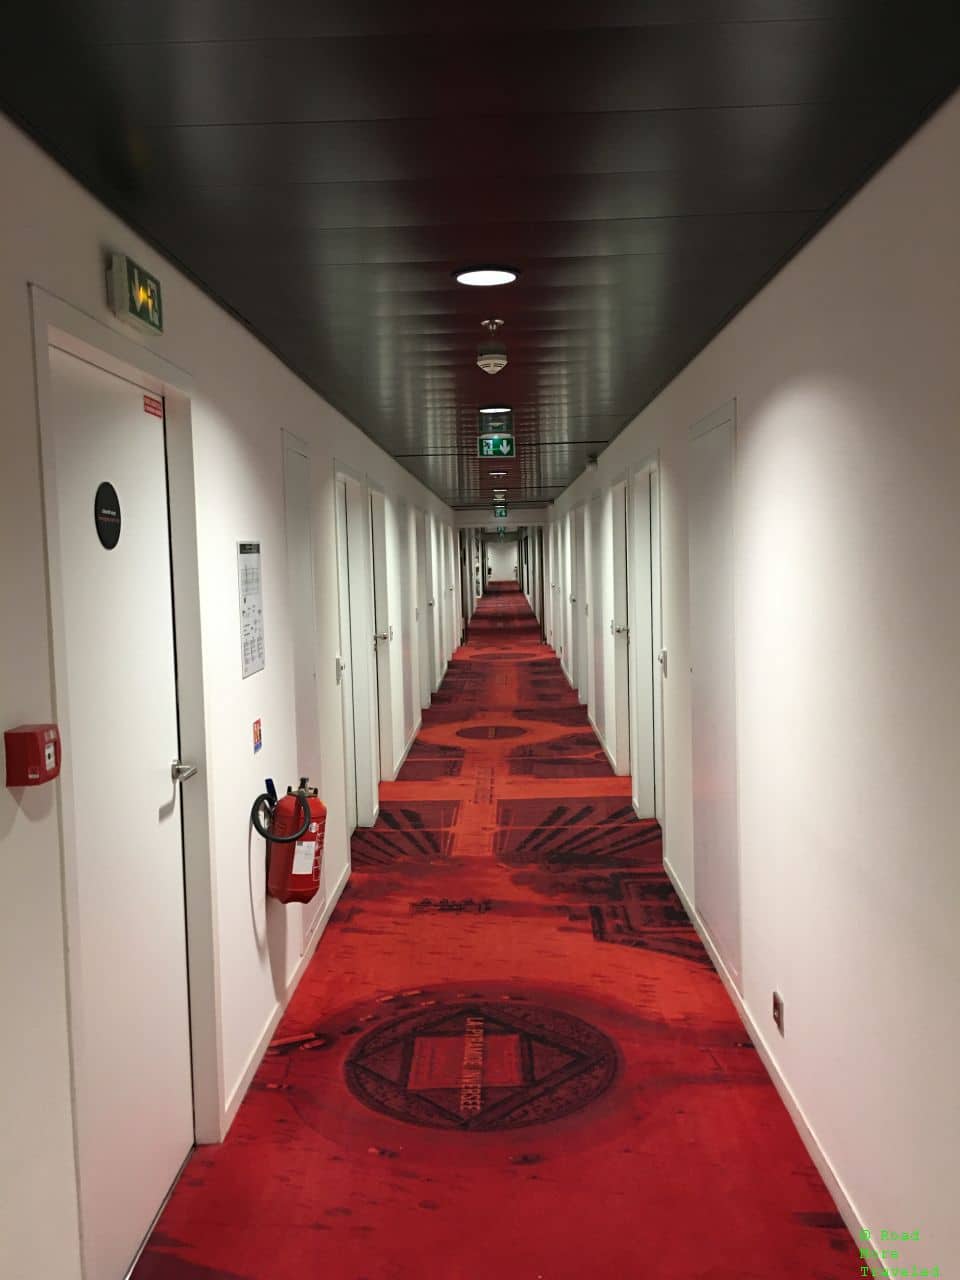 citizzenM CDG guest corridor carpet design